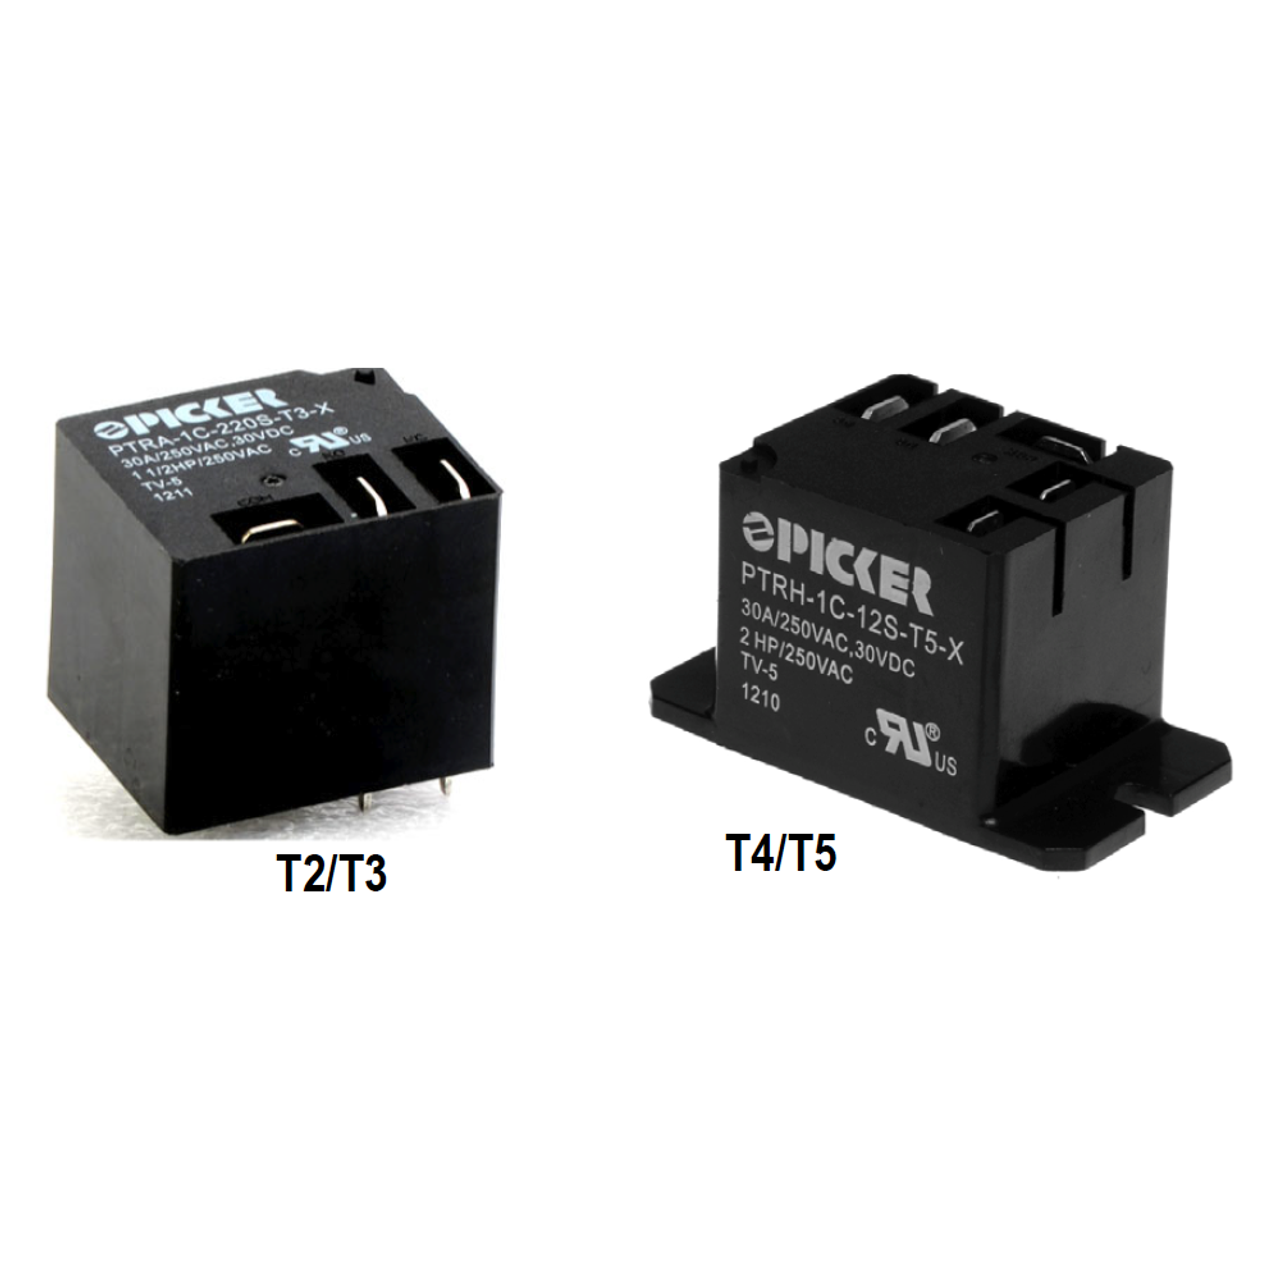 Picker PTRH-1C-110SFT-T5-X670.6 Power Relays